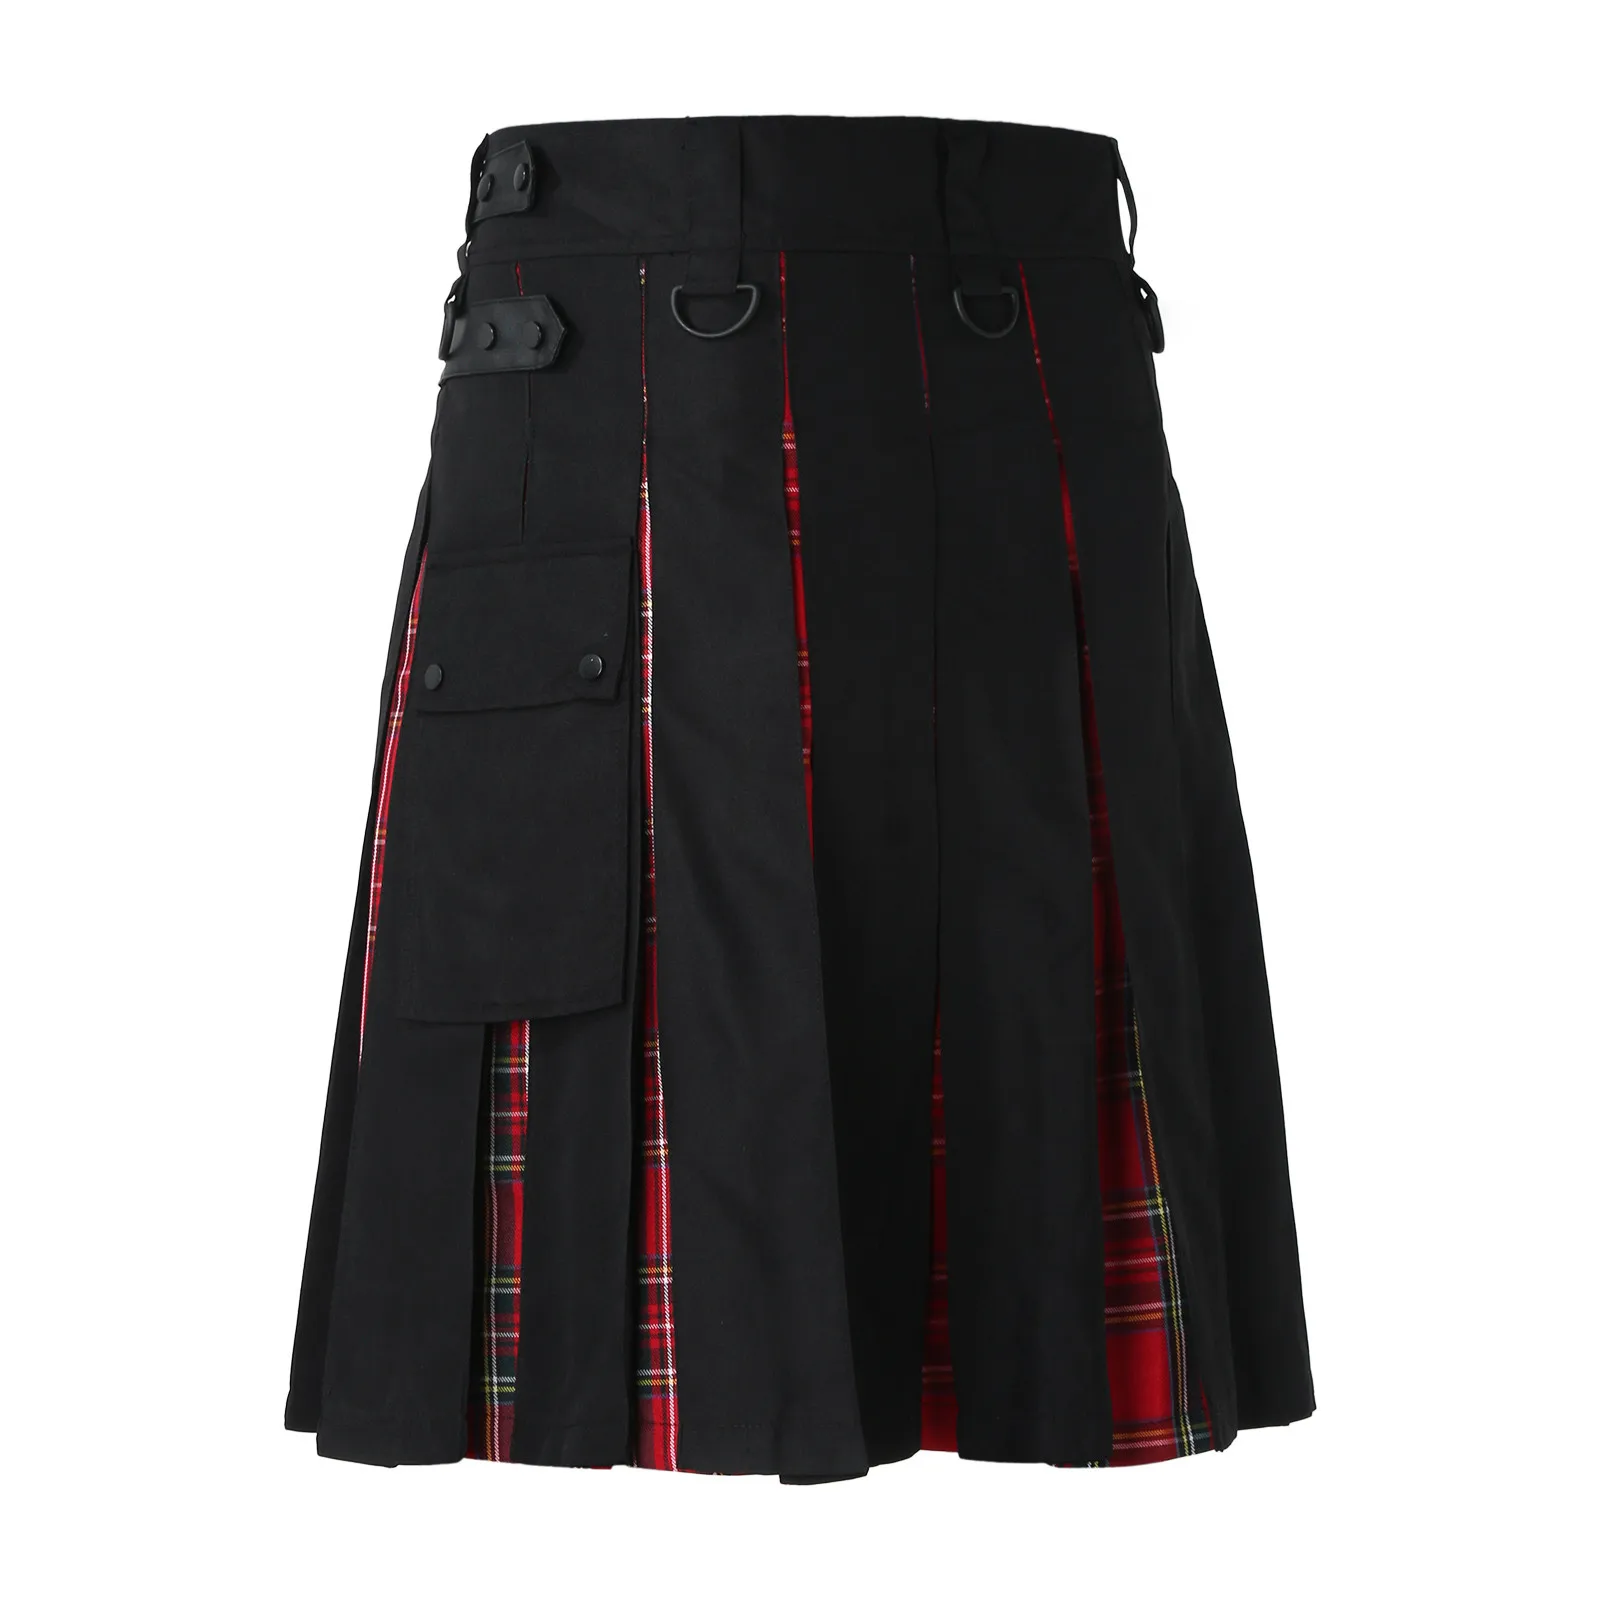 Kilts-Men's Plus Size Scottish Hybrid Black Cotton & Tartan Utility Kilts with Leather Straps Kilts for Men